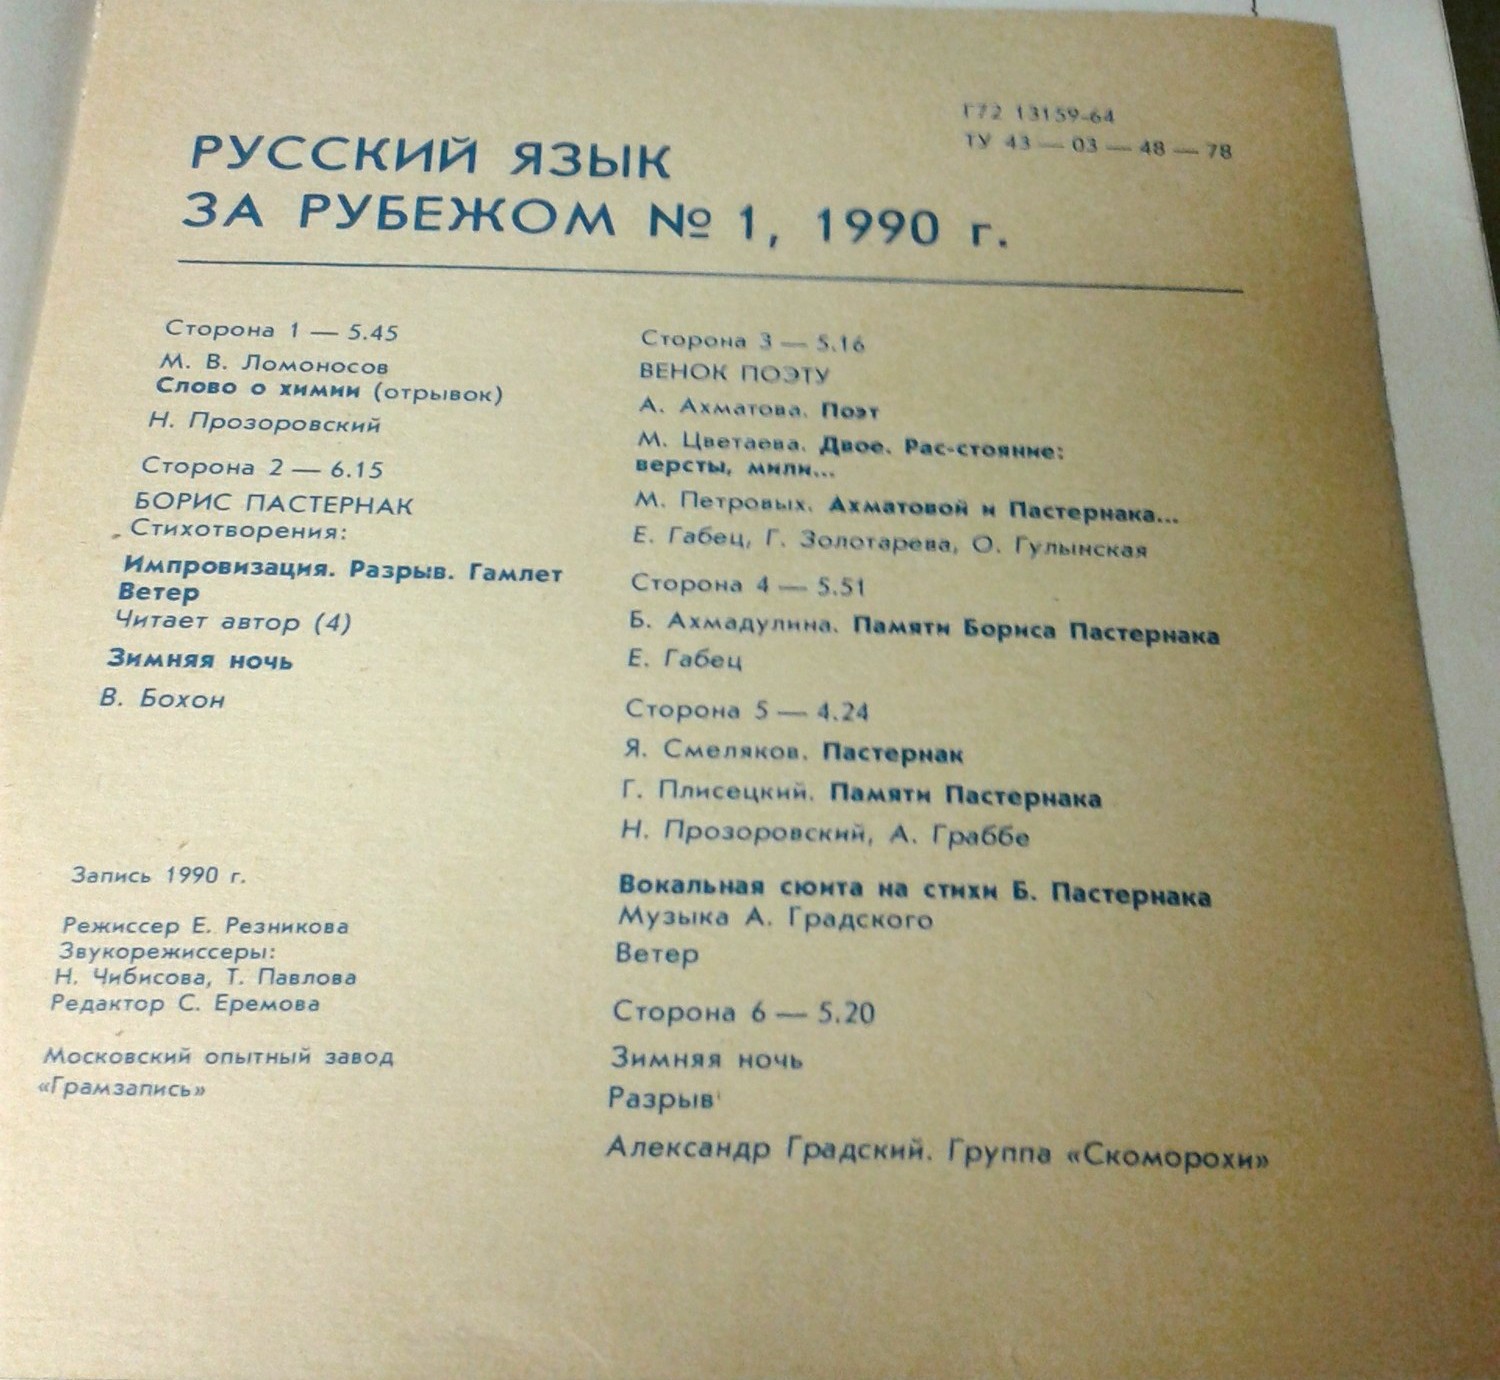 "РУССКИЙ ЯЗЫК ЗА РУБЕЖОМ", № 1 - 1990